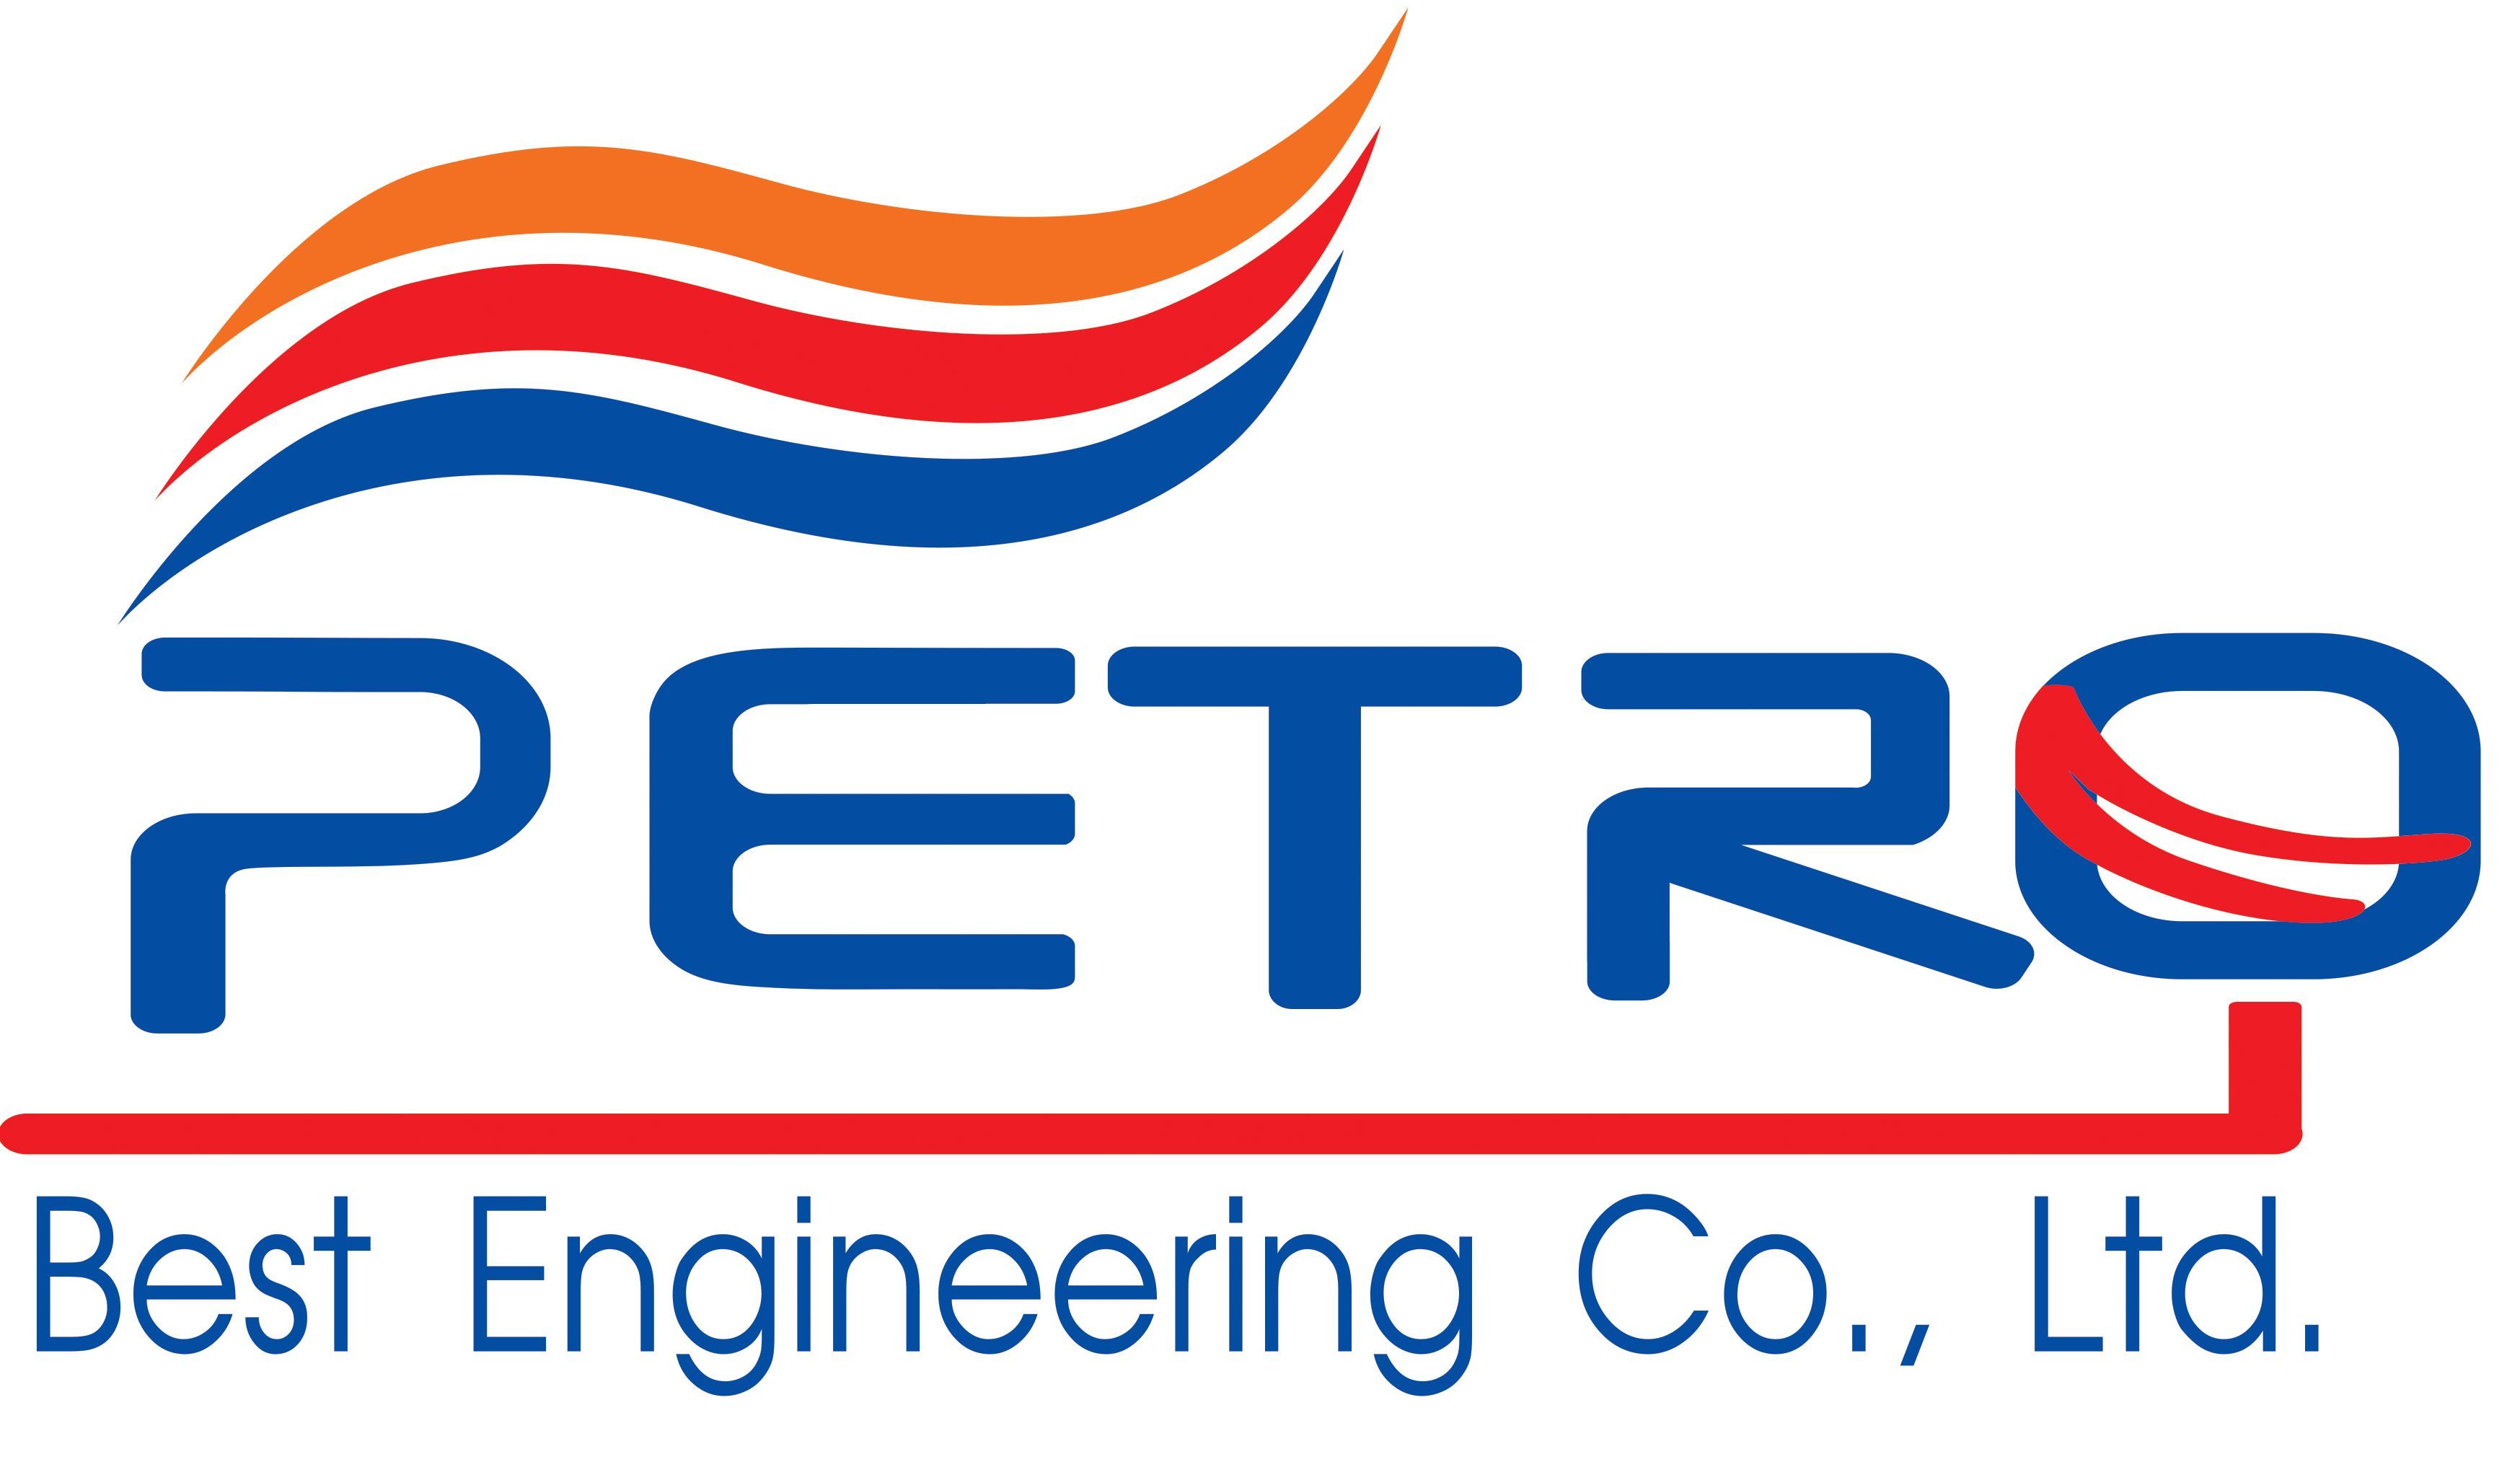 PETRO BEST ENGINEERING CO.,LTD., บริษัท ปิโตร เบสท์ เอ็นจิเนียริ่ง จำกัด